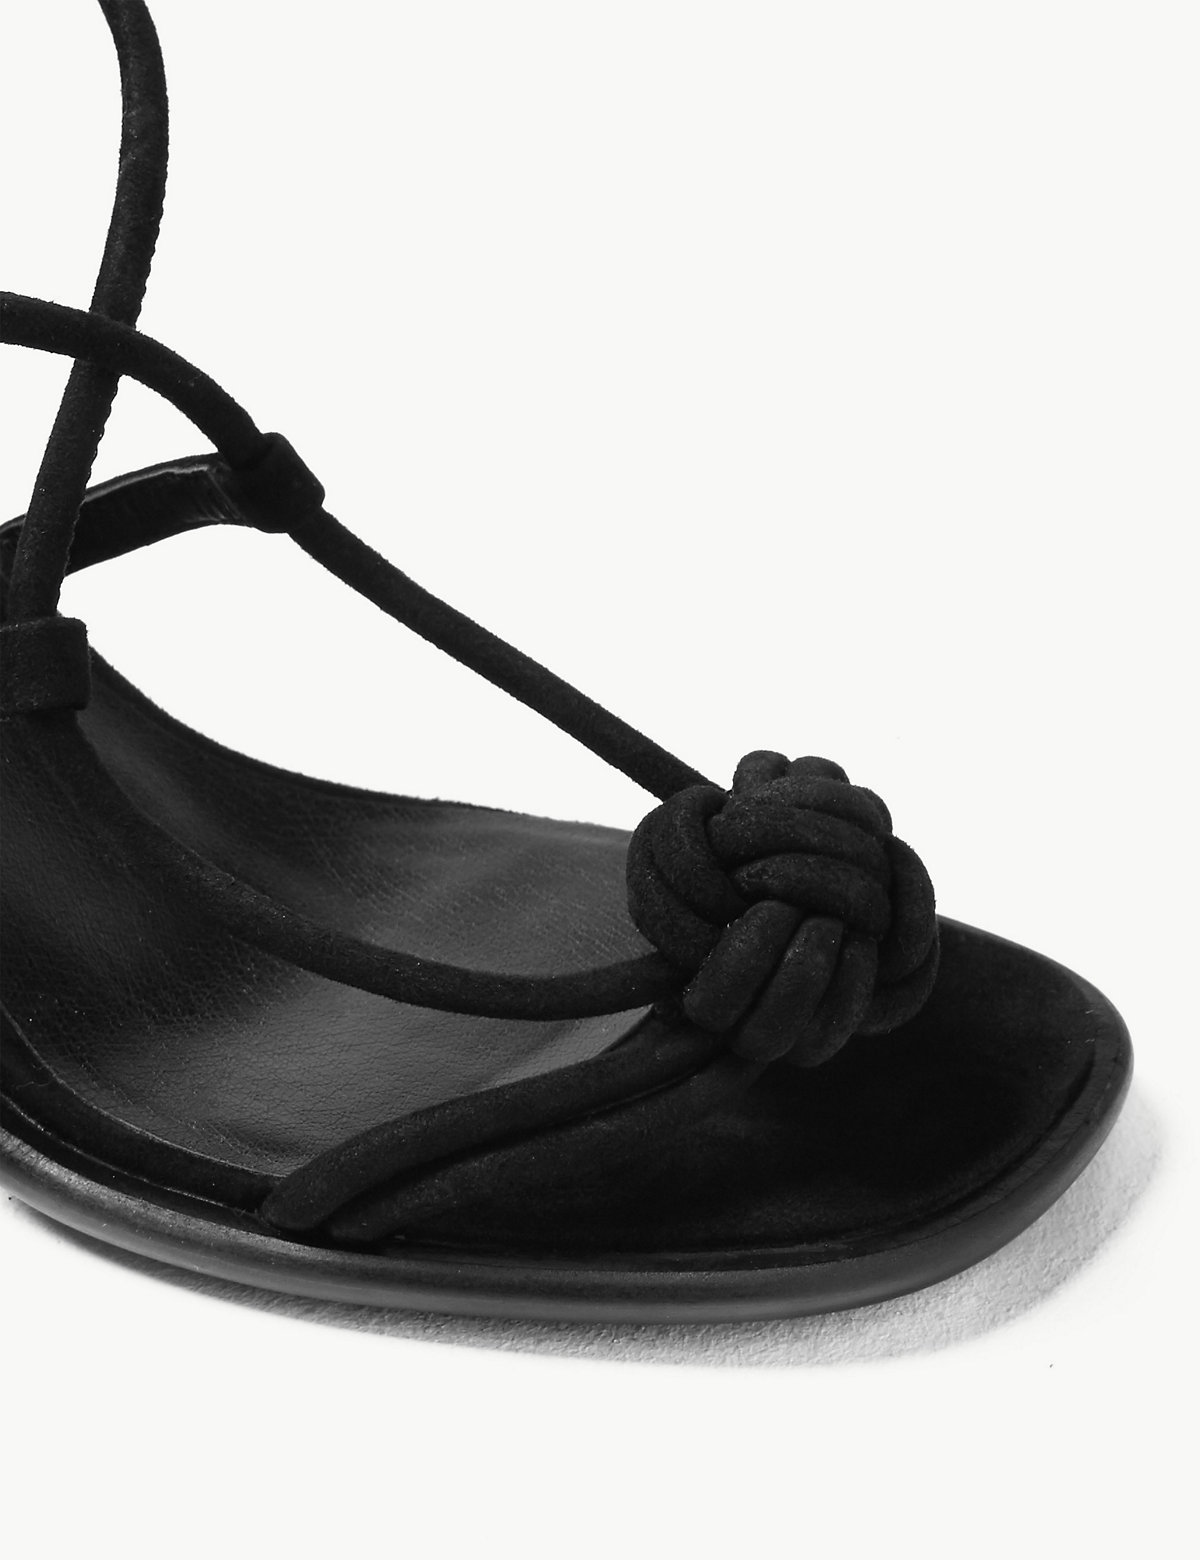 The Kat Heeled Gladiator Sandal